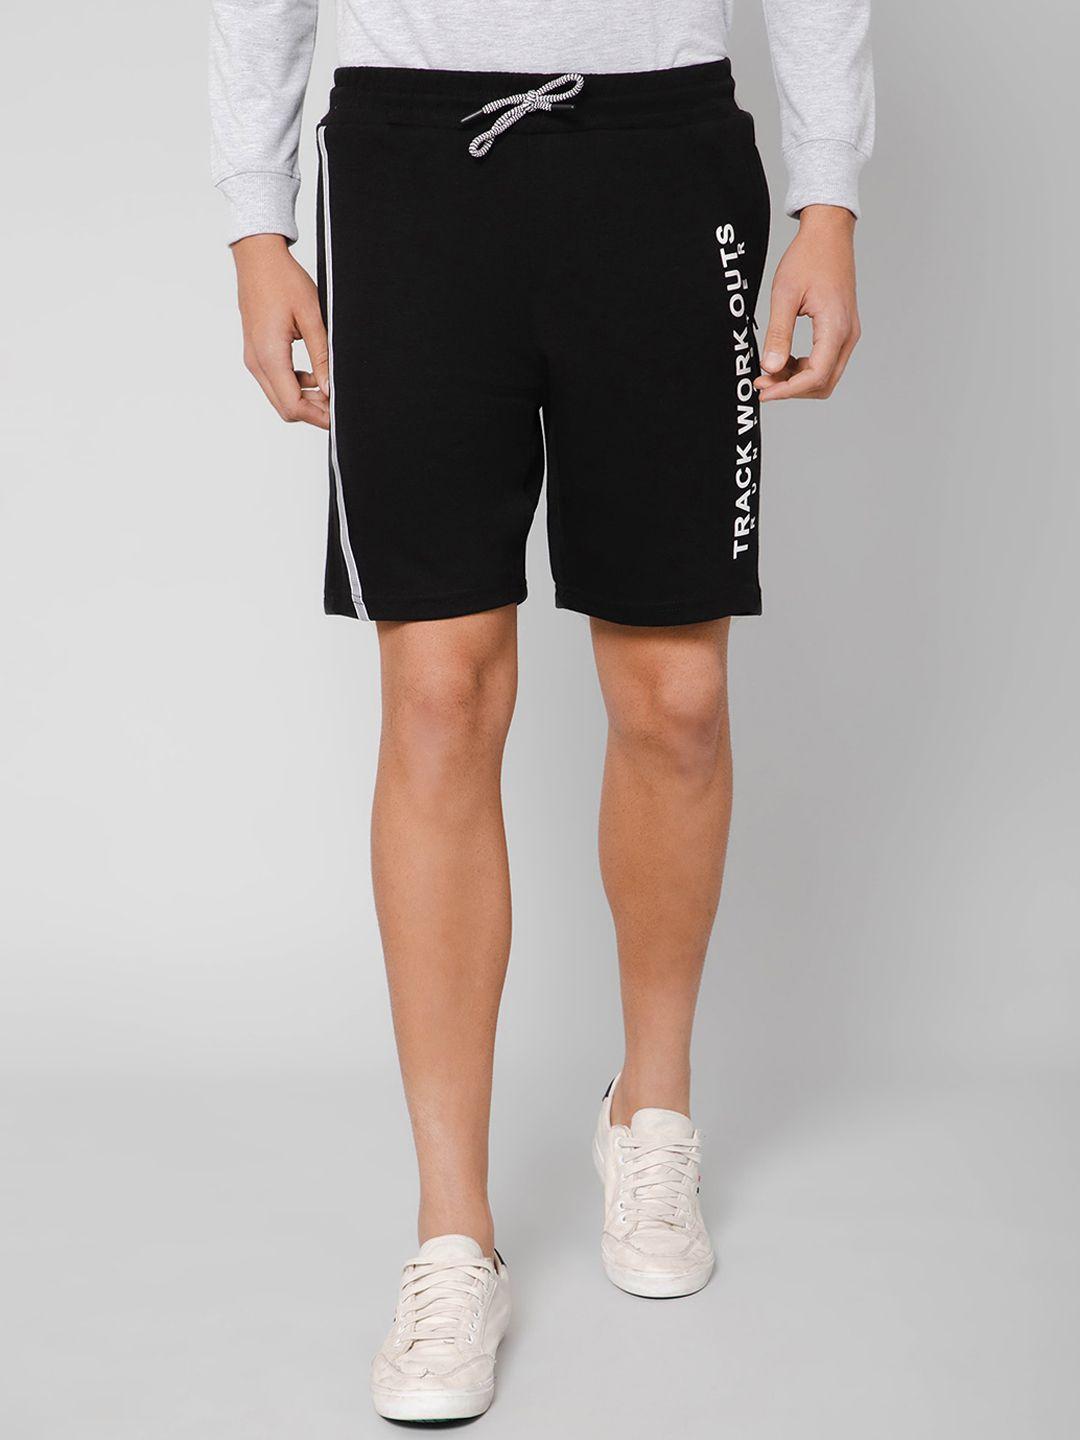 cantabil men printed cotton sports shorts